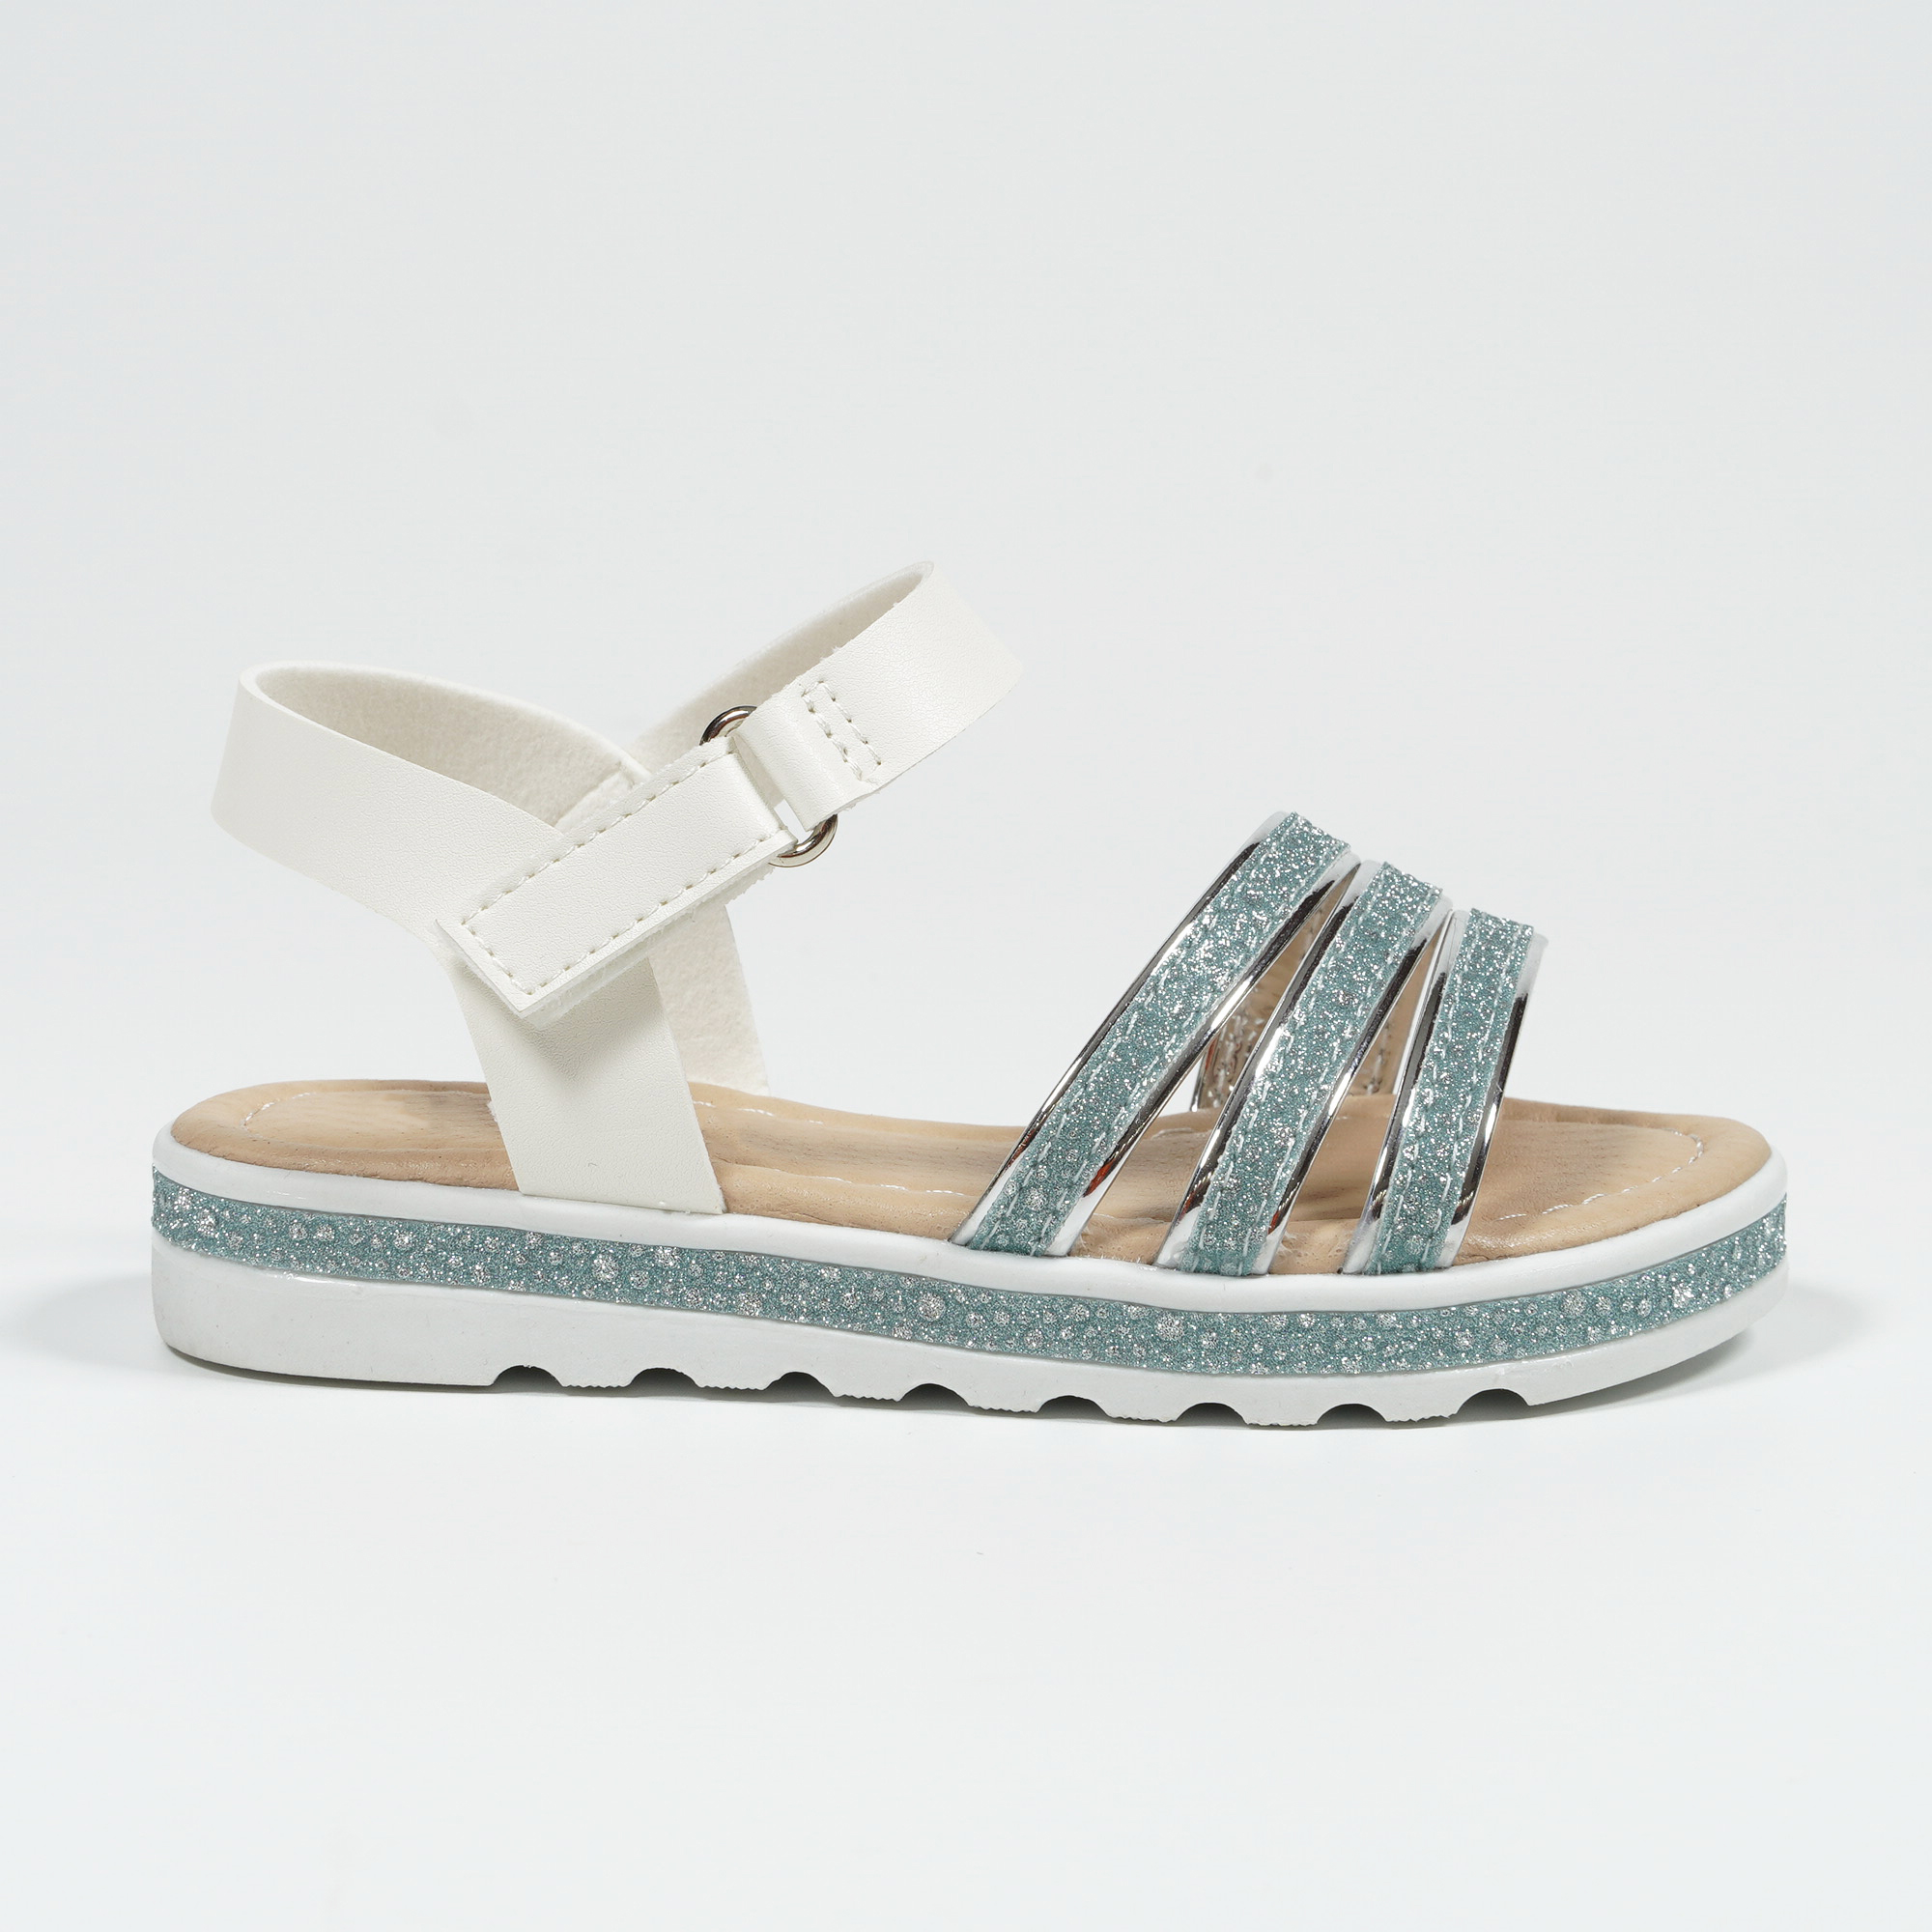 Nikoofly New Wholesale Shiny Sequins Non-slip Beach Slippers Glitter Girls Sandals